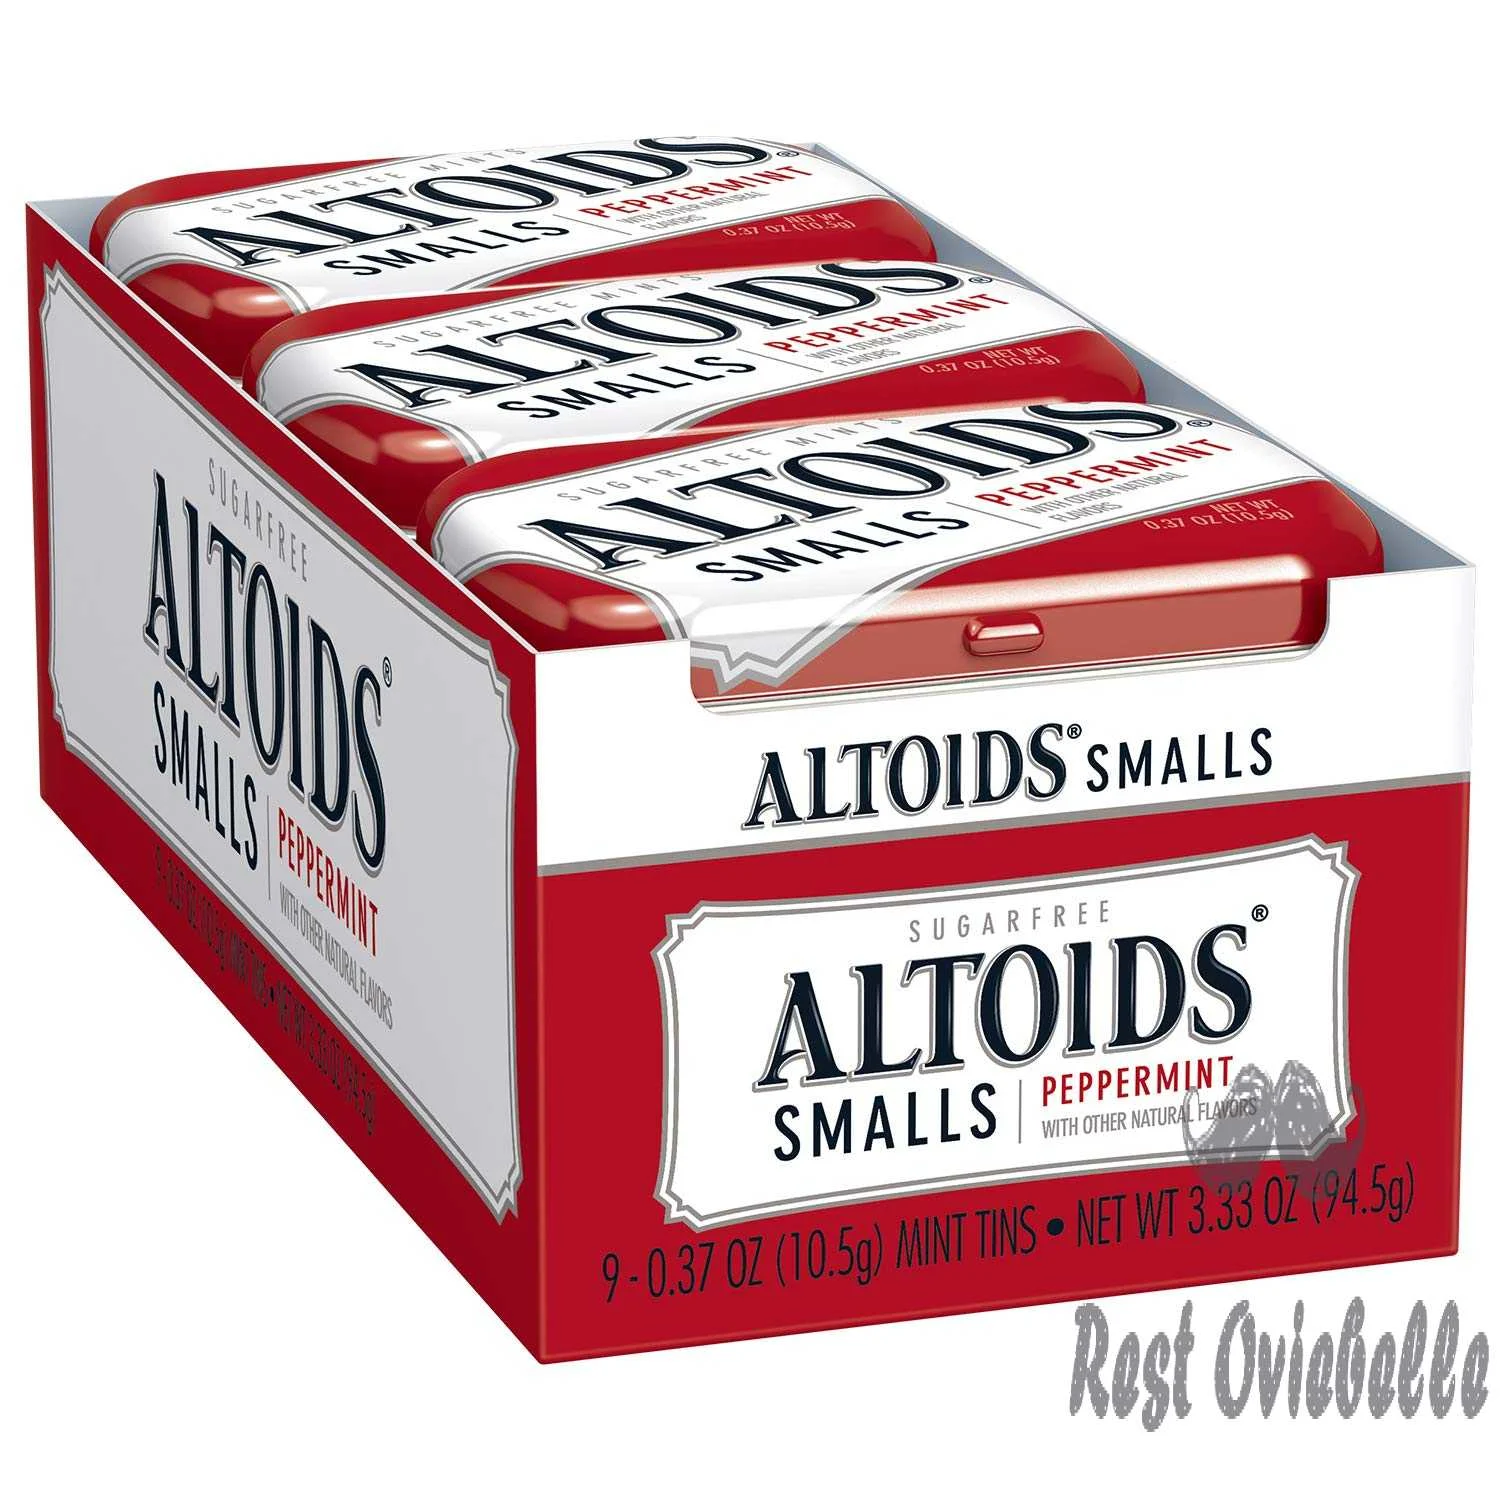 Altoids Smalls Peppermint Breath Mints